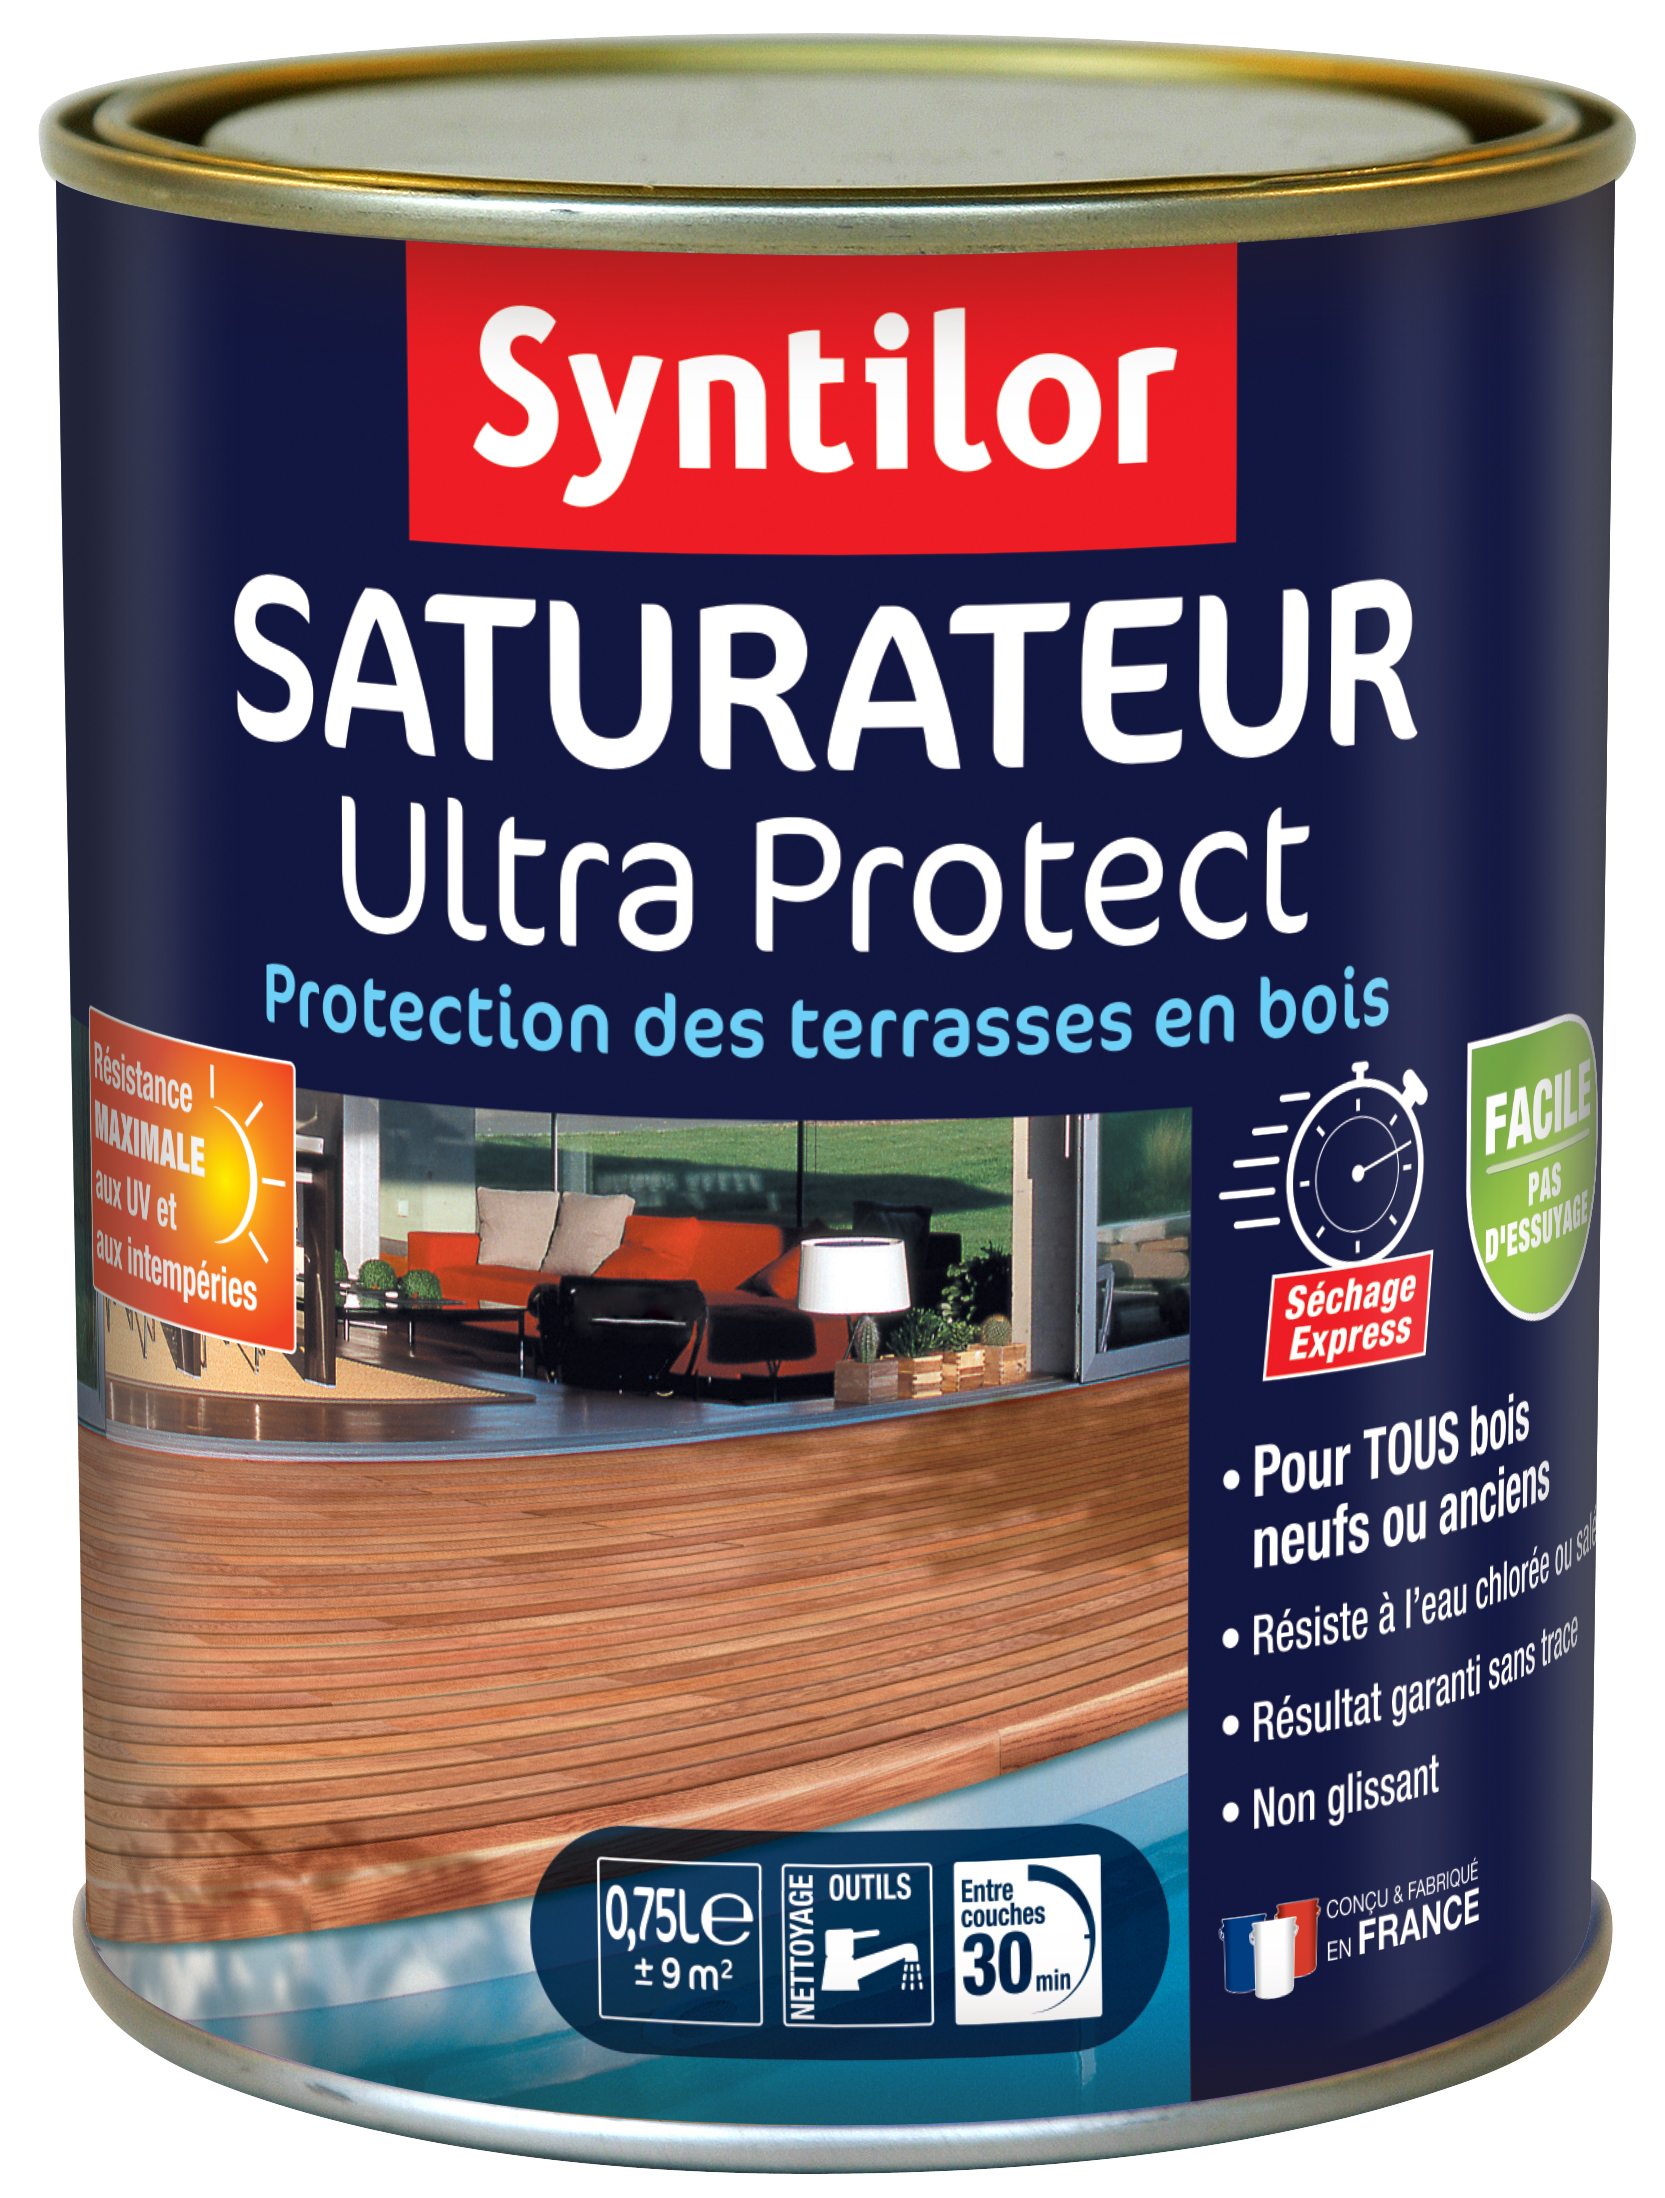 Saturateur ultra protect teck 0.75L - SYNTILOR